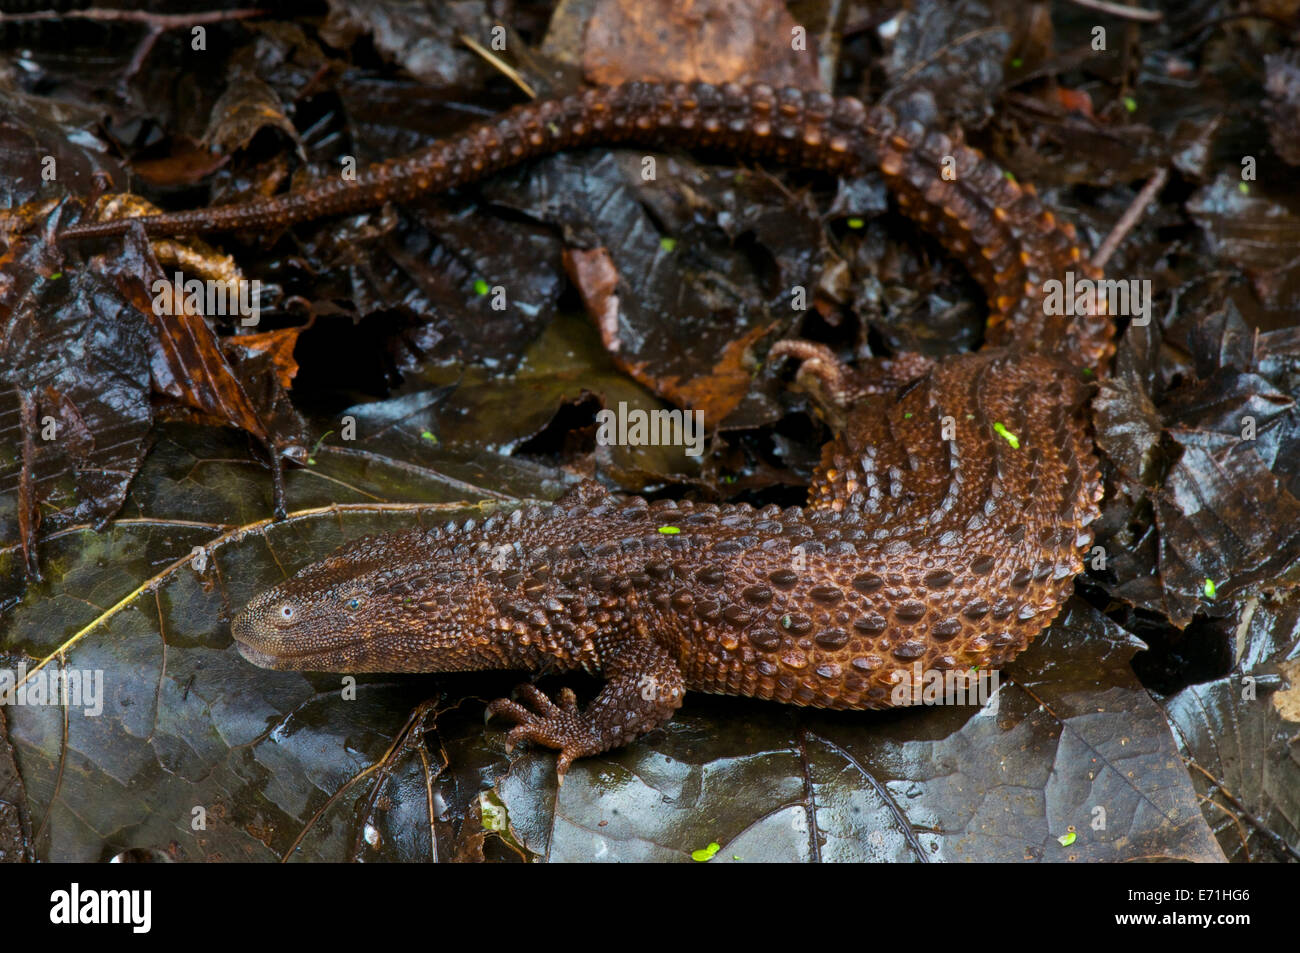 Borneo earless Monitor / Lanthanotus Borneensis Stockfoto